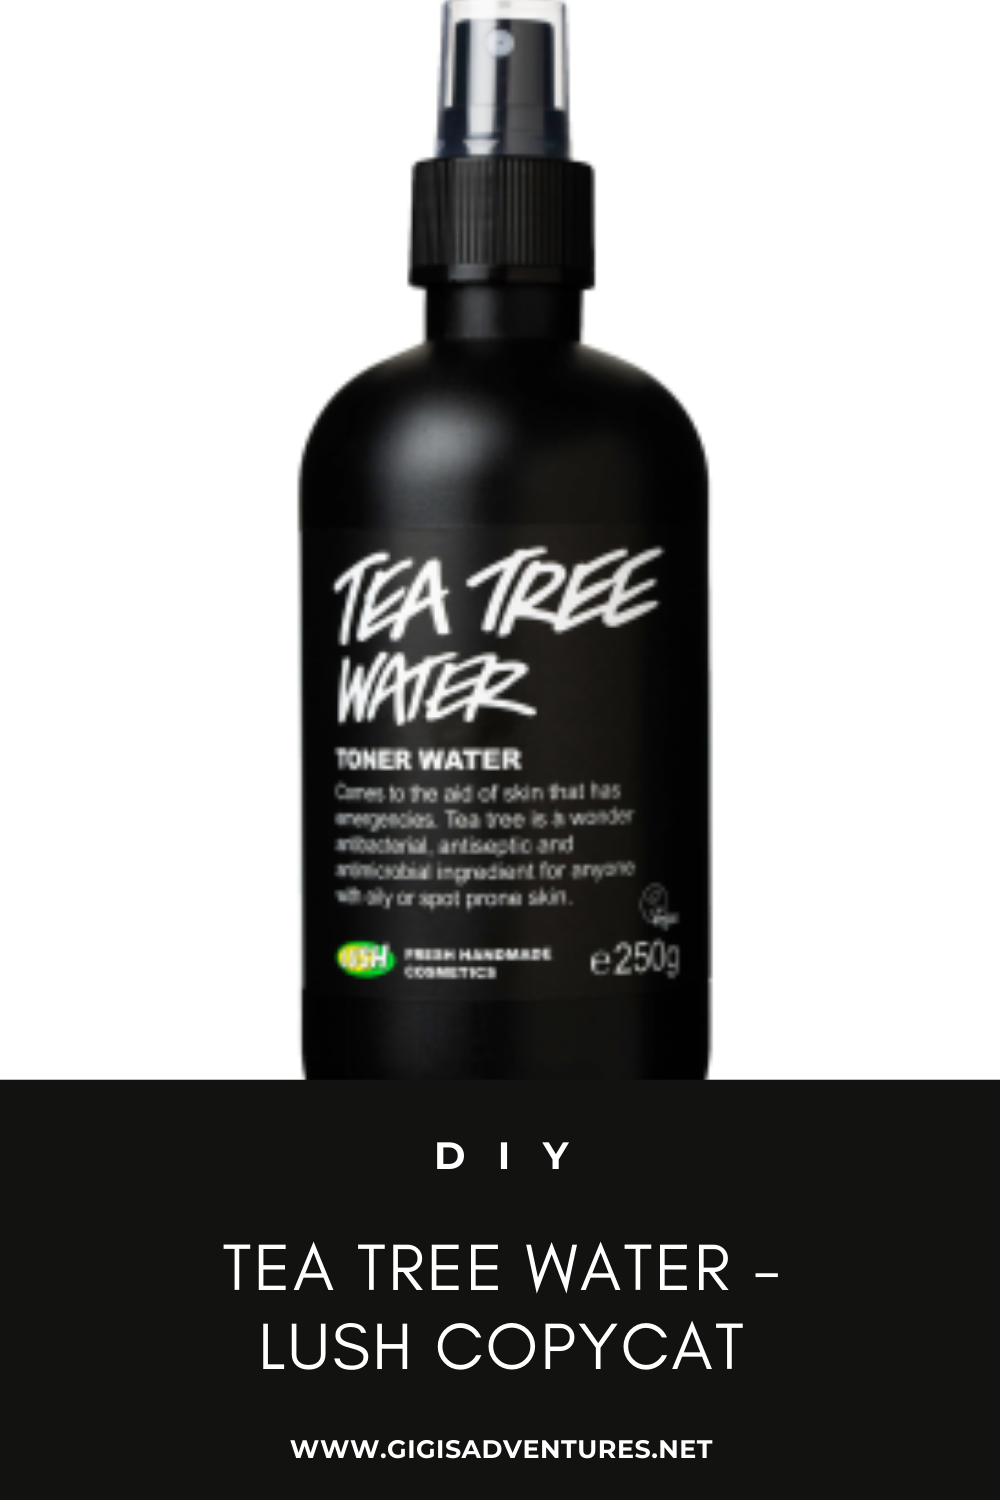 DIY Lush Tea Tree Water - Lush Tea Tree Water Copycat